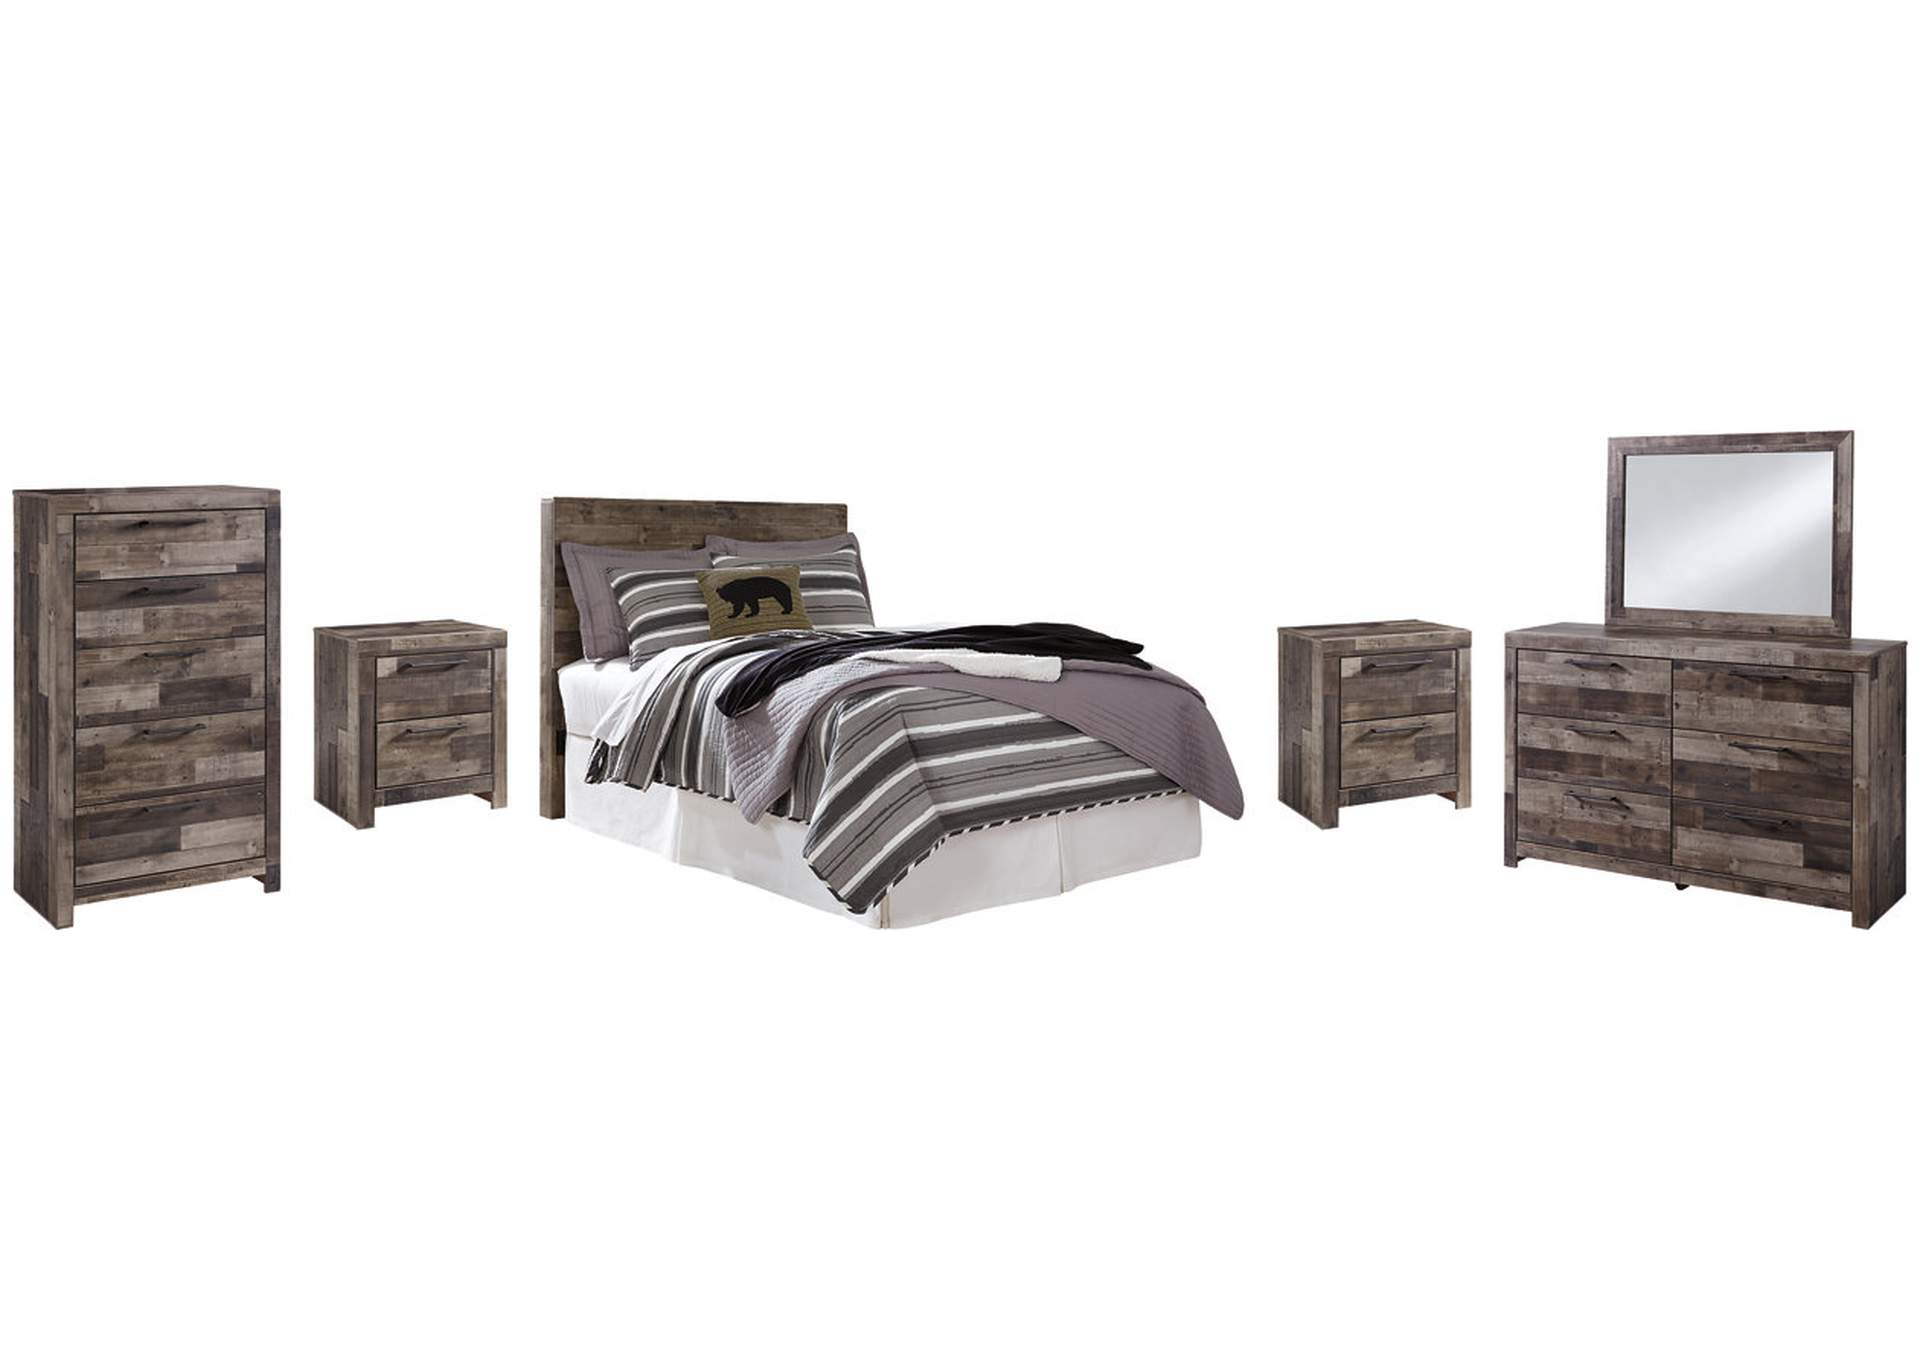 Derekson Full Panel Headboard Bed with Mirrored Dresser, Chest and 2 Nightstands,Benchcraft